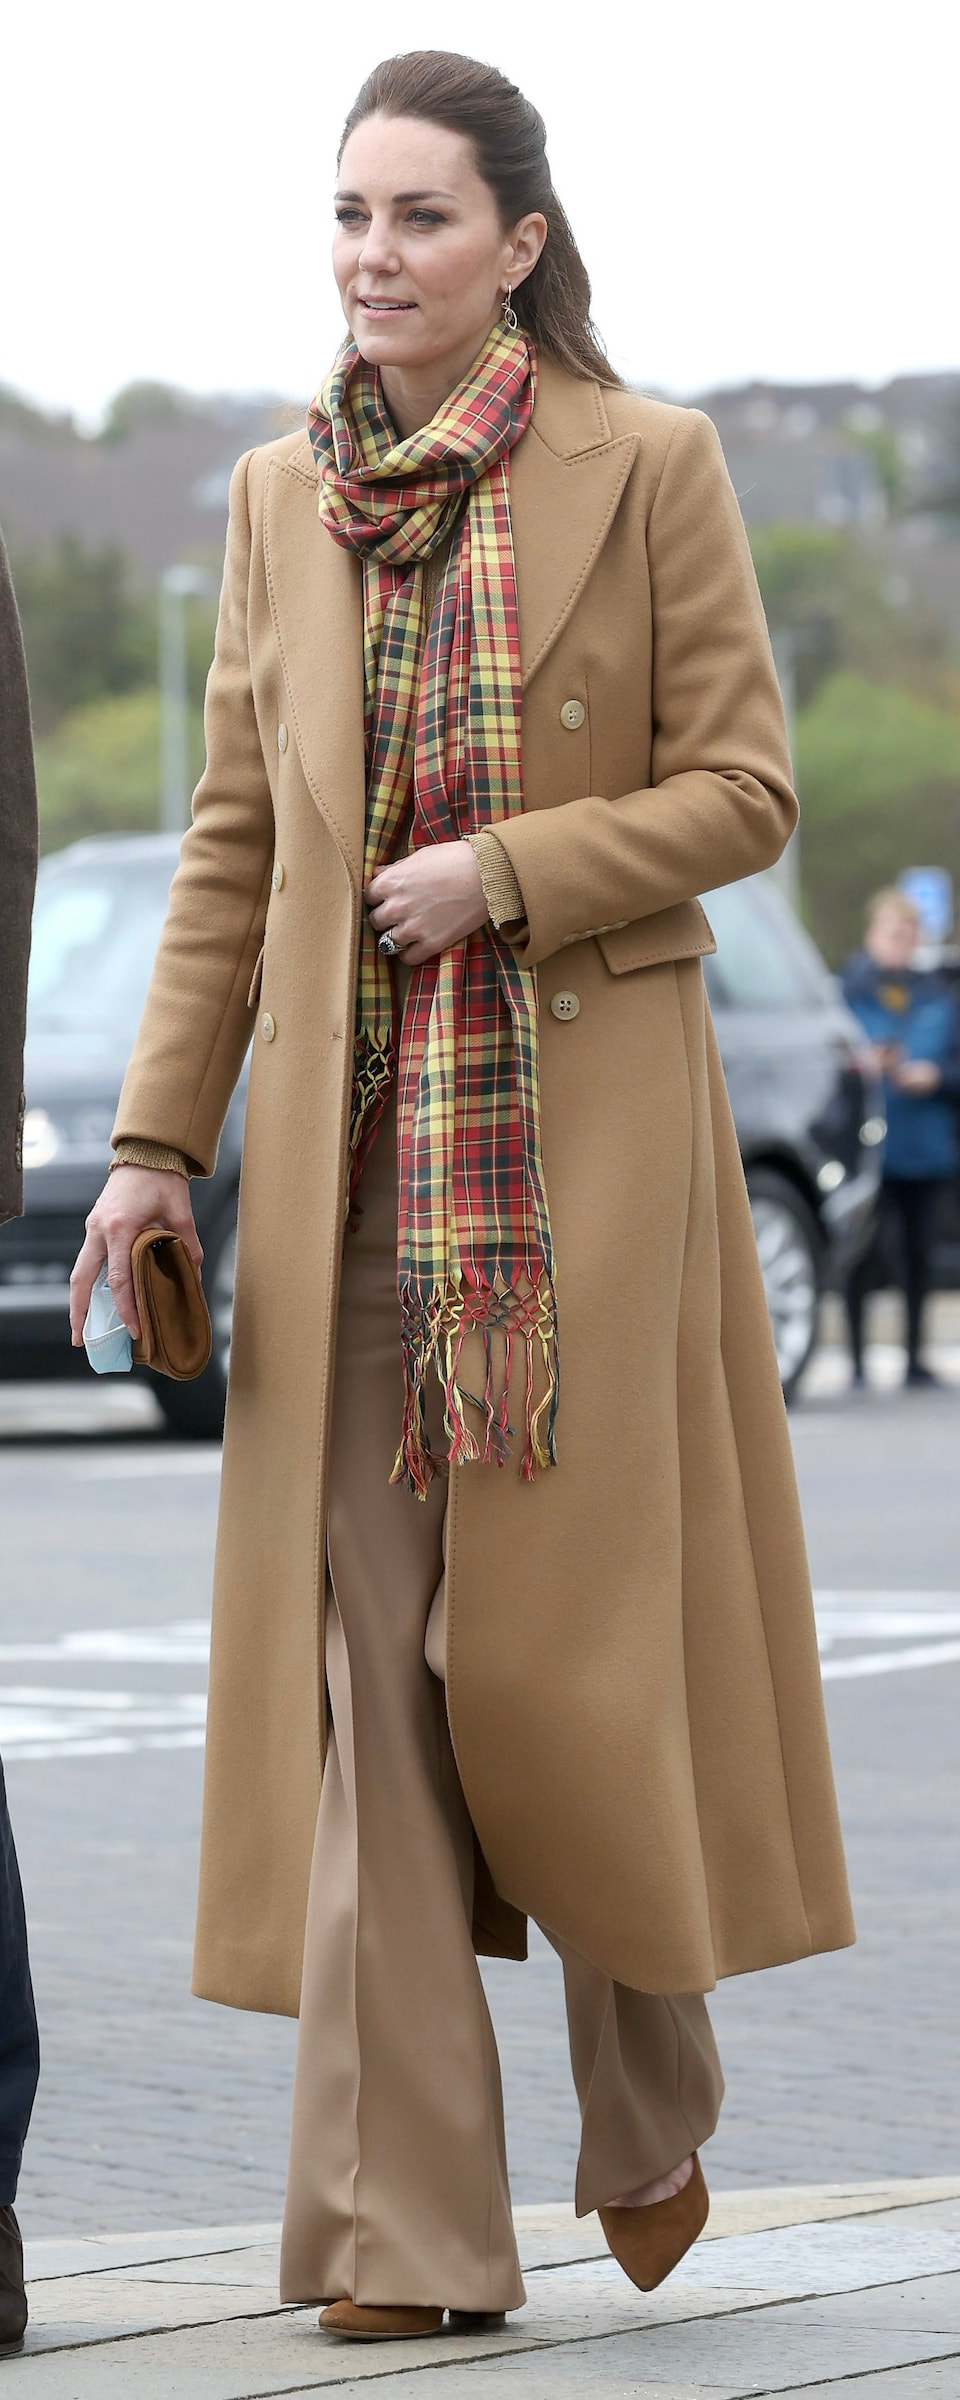 Emmy London Josie Saddle Brown Block Heel Pumps as seen on Kate Middleton, The Duchess of Cambridge.